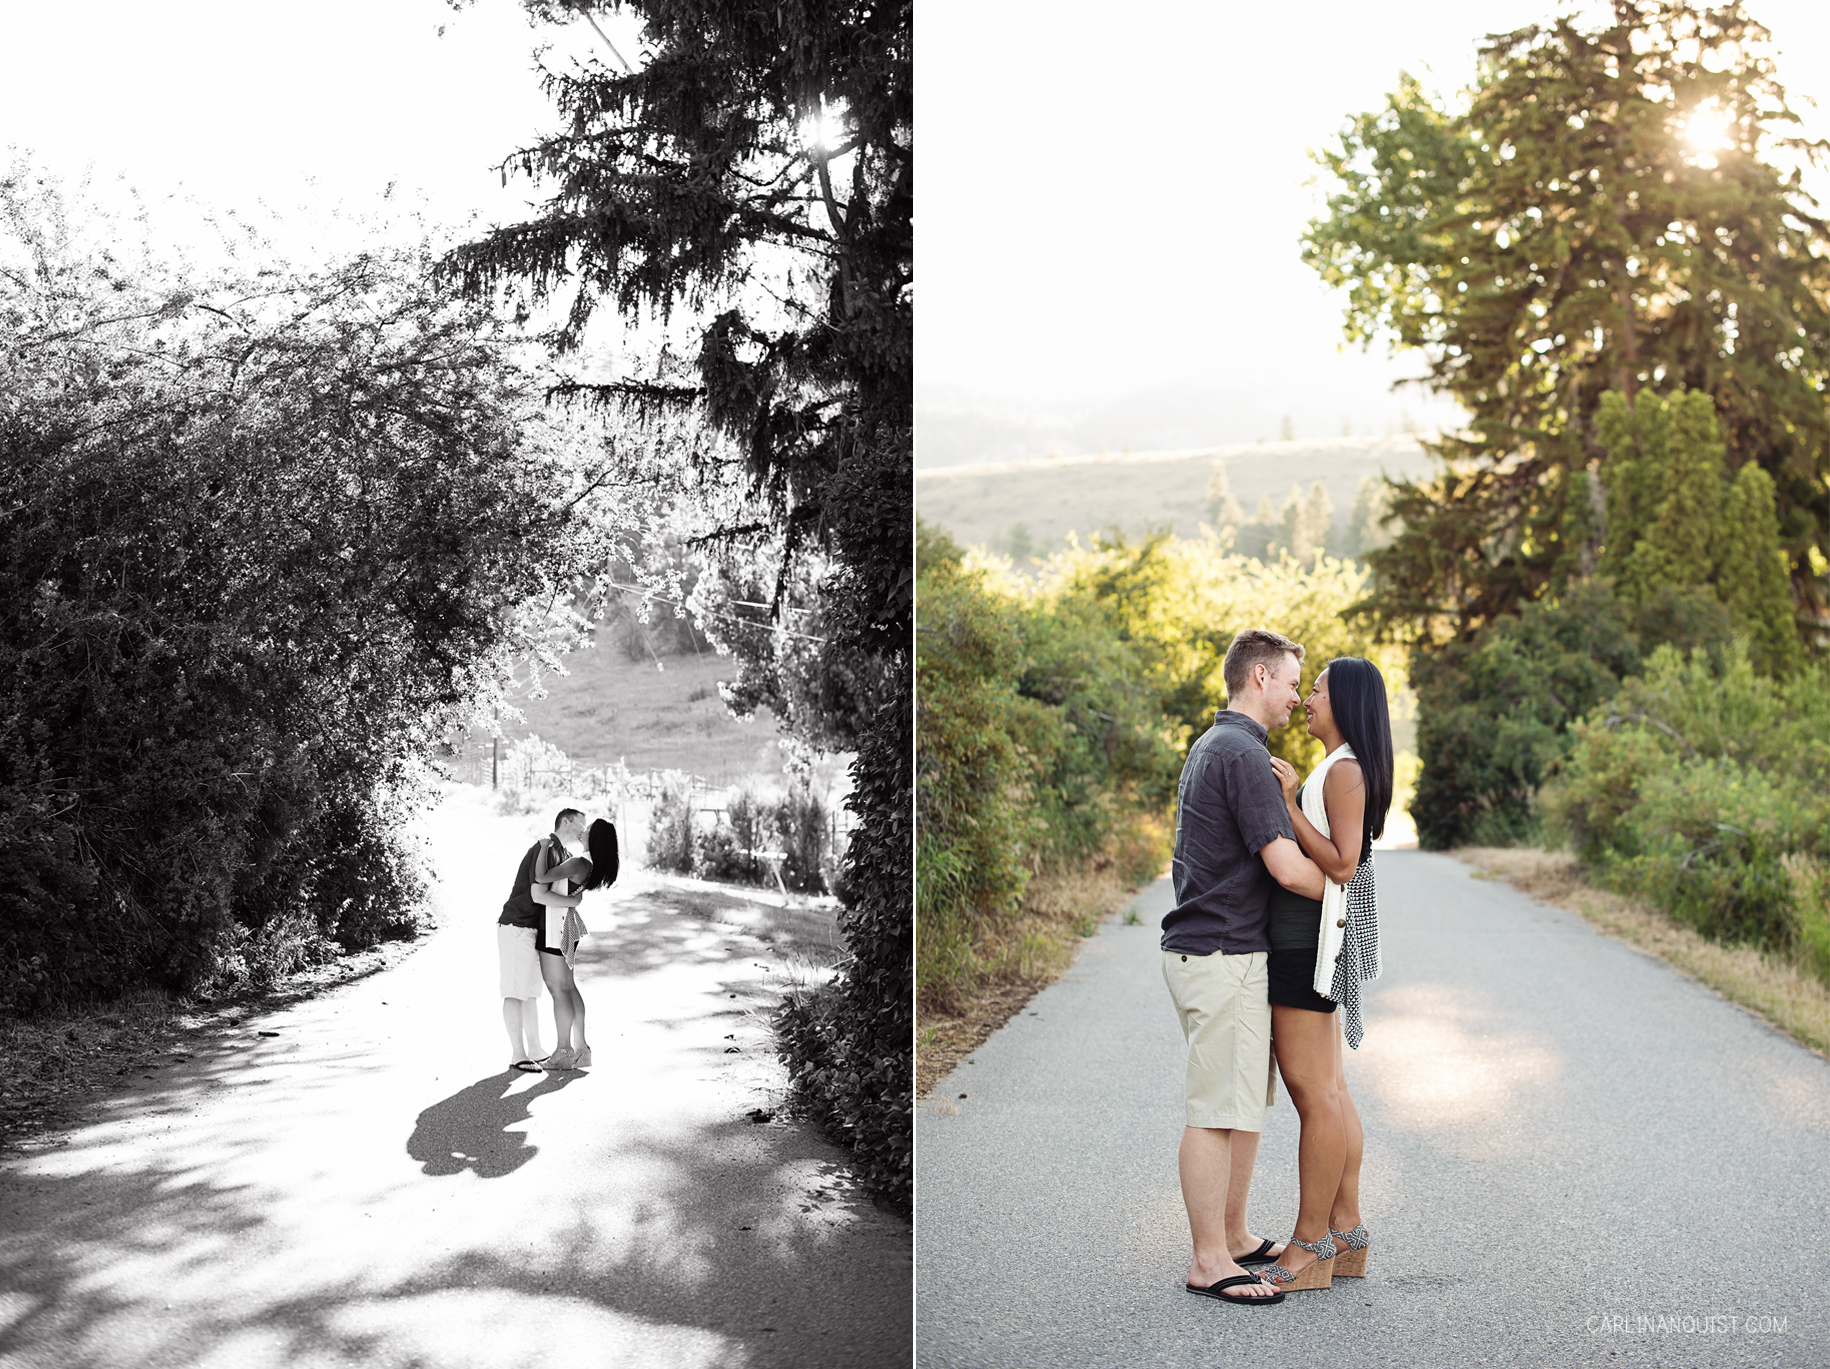 Summerland Engagement Photos | Carlin Anquist Photography